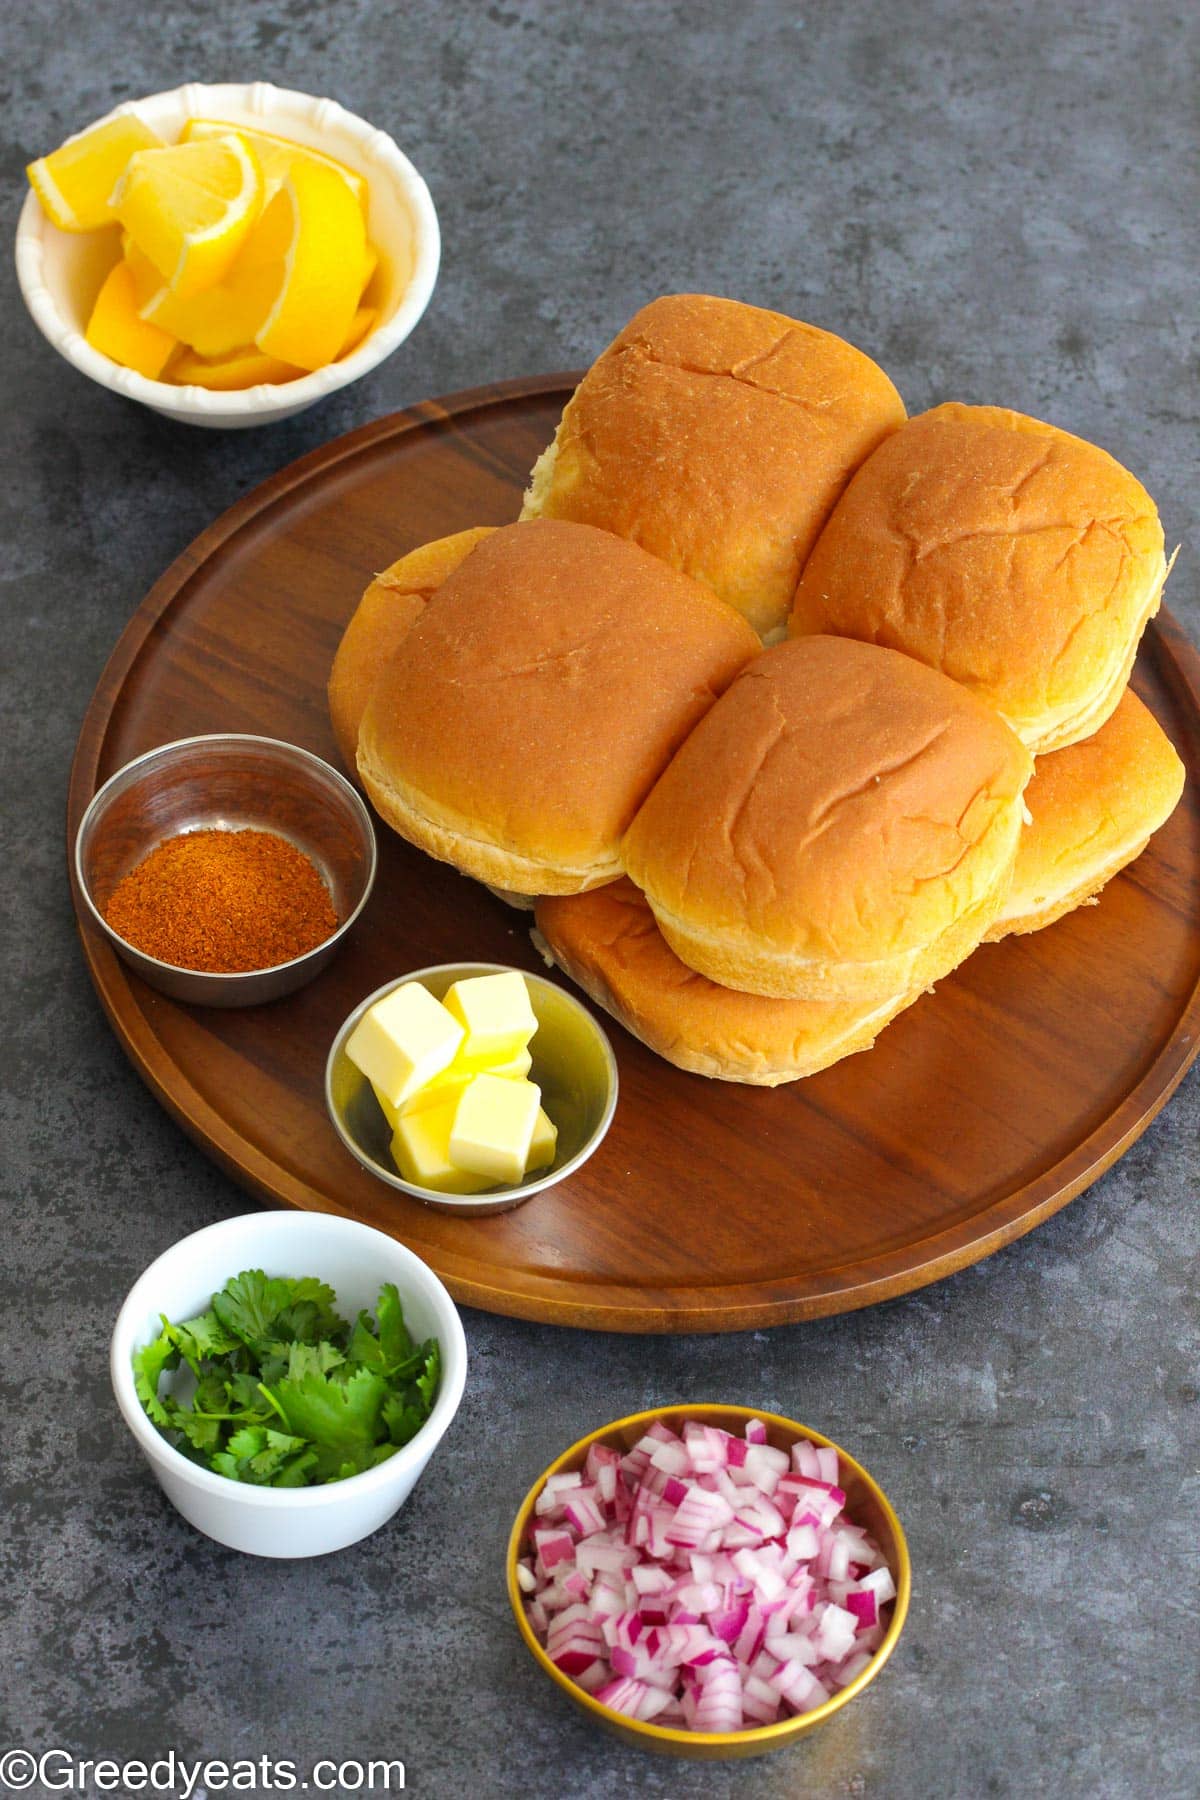 Ingredients like butter and pav bhaji masala to toast pav. Also lemon wedges and cilantro to serve bhaji.